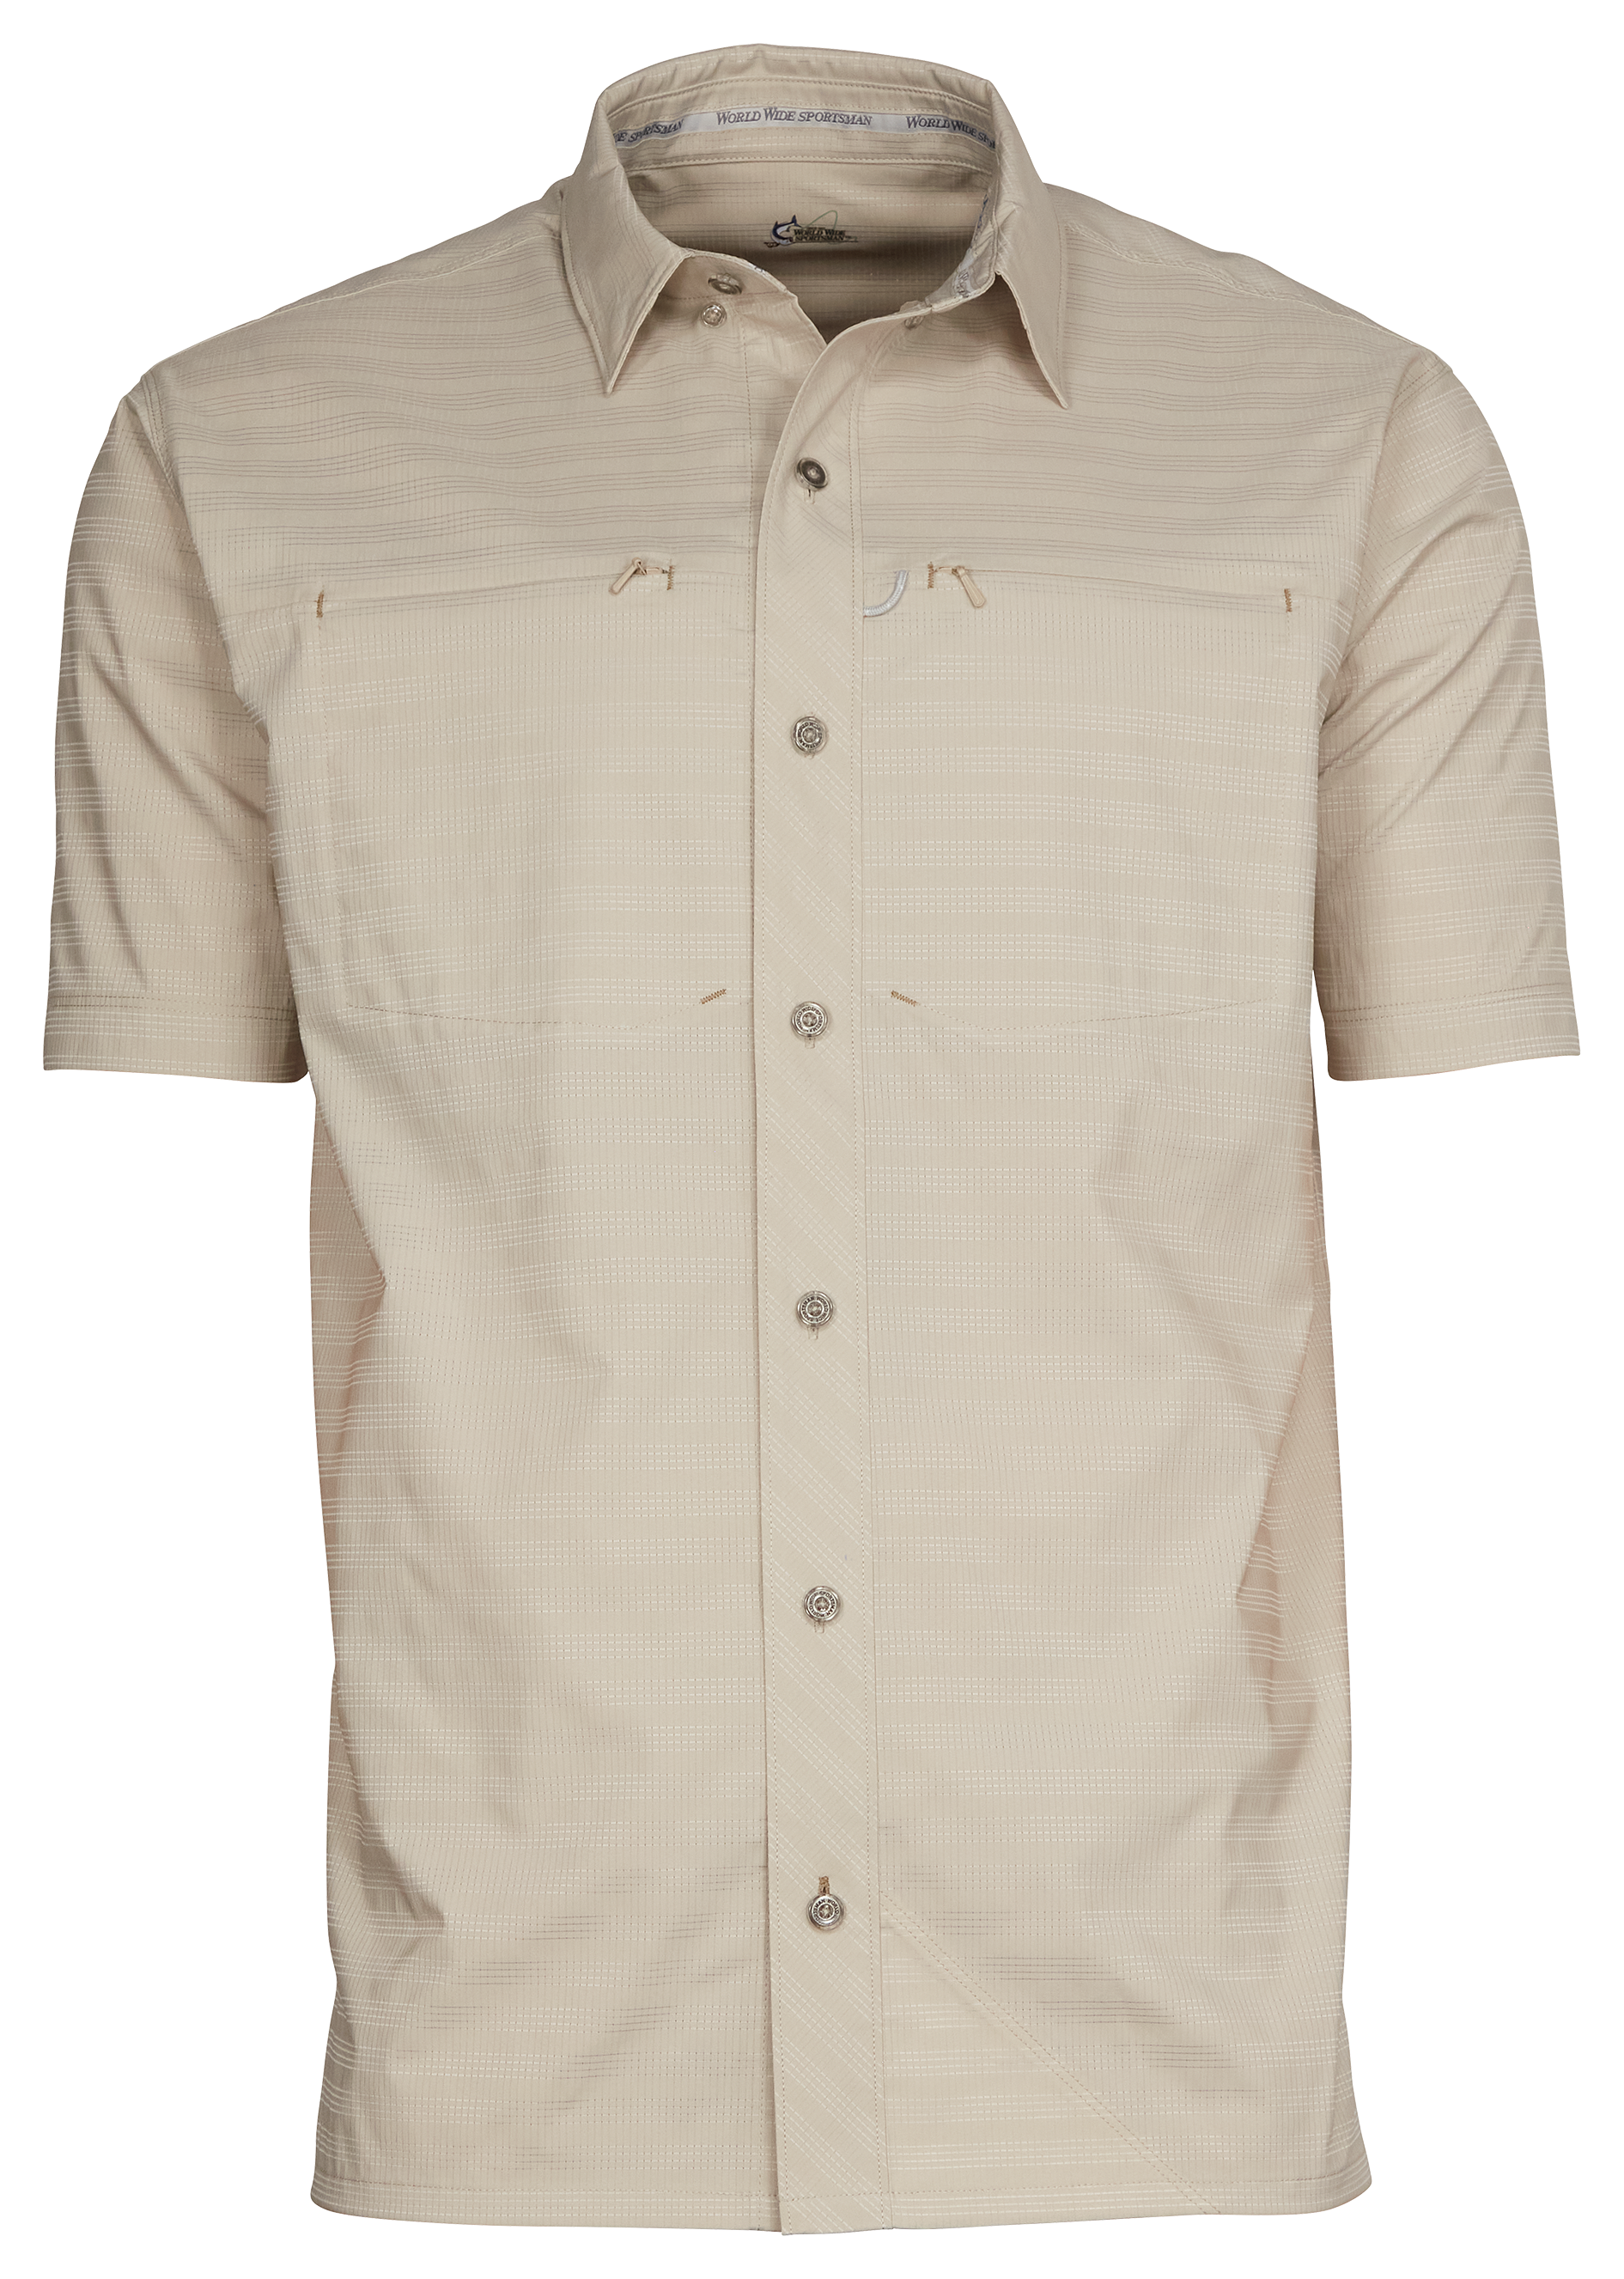 World Wide Sportsman Seacrest 2-Pocket Short-Sleeve Button-Down Shirt for Men - Peyote - M